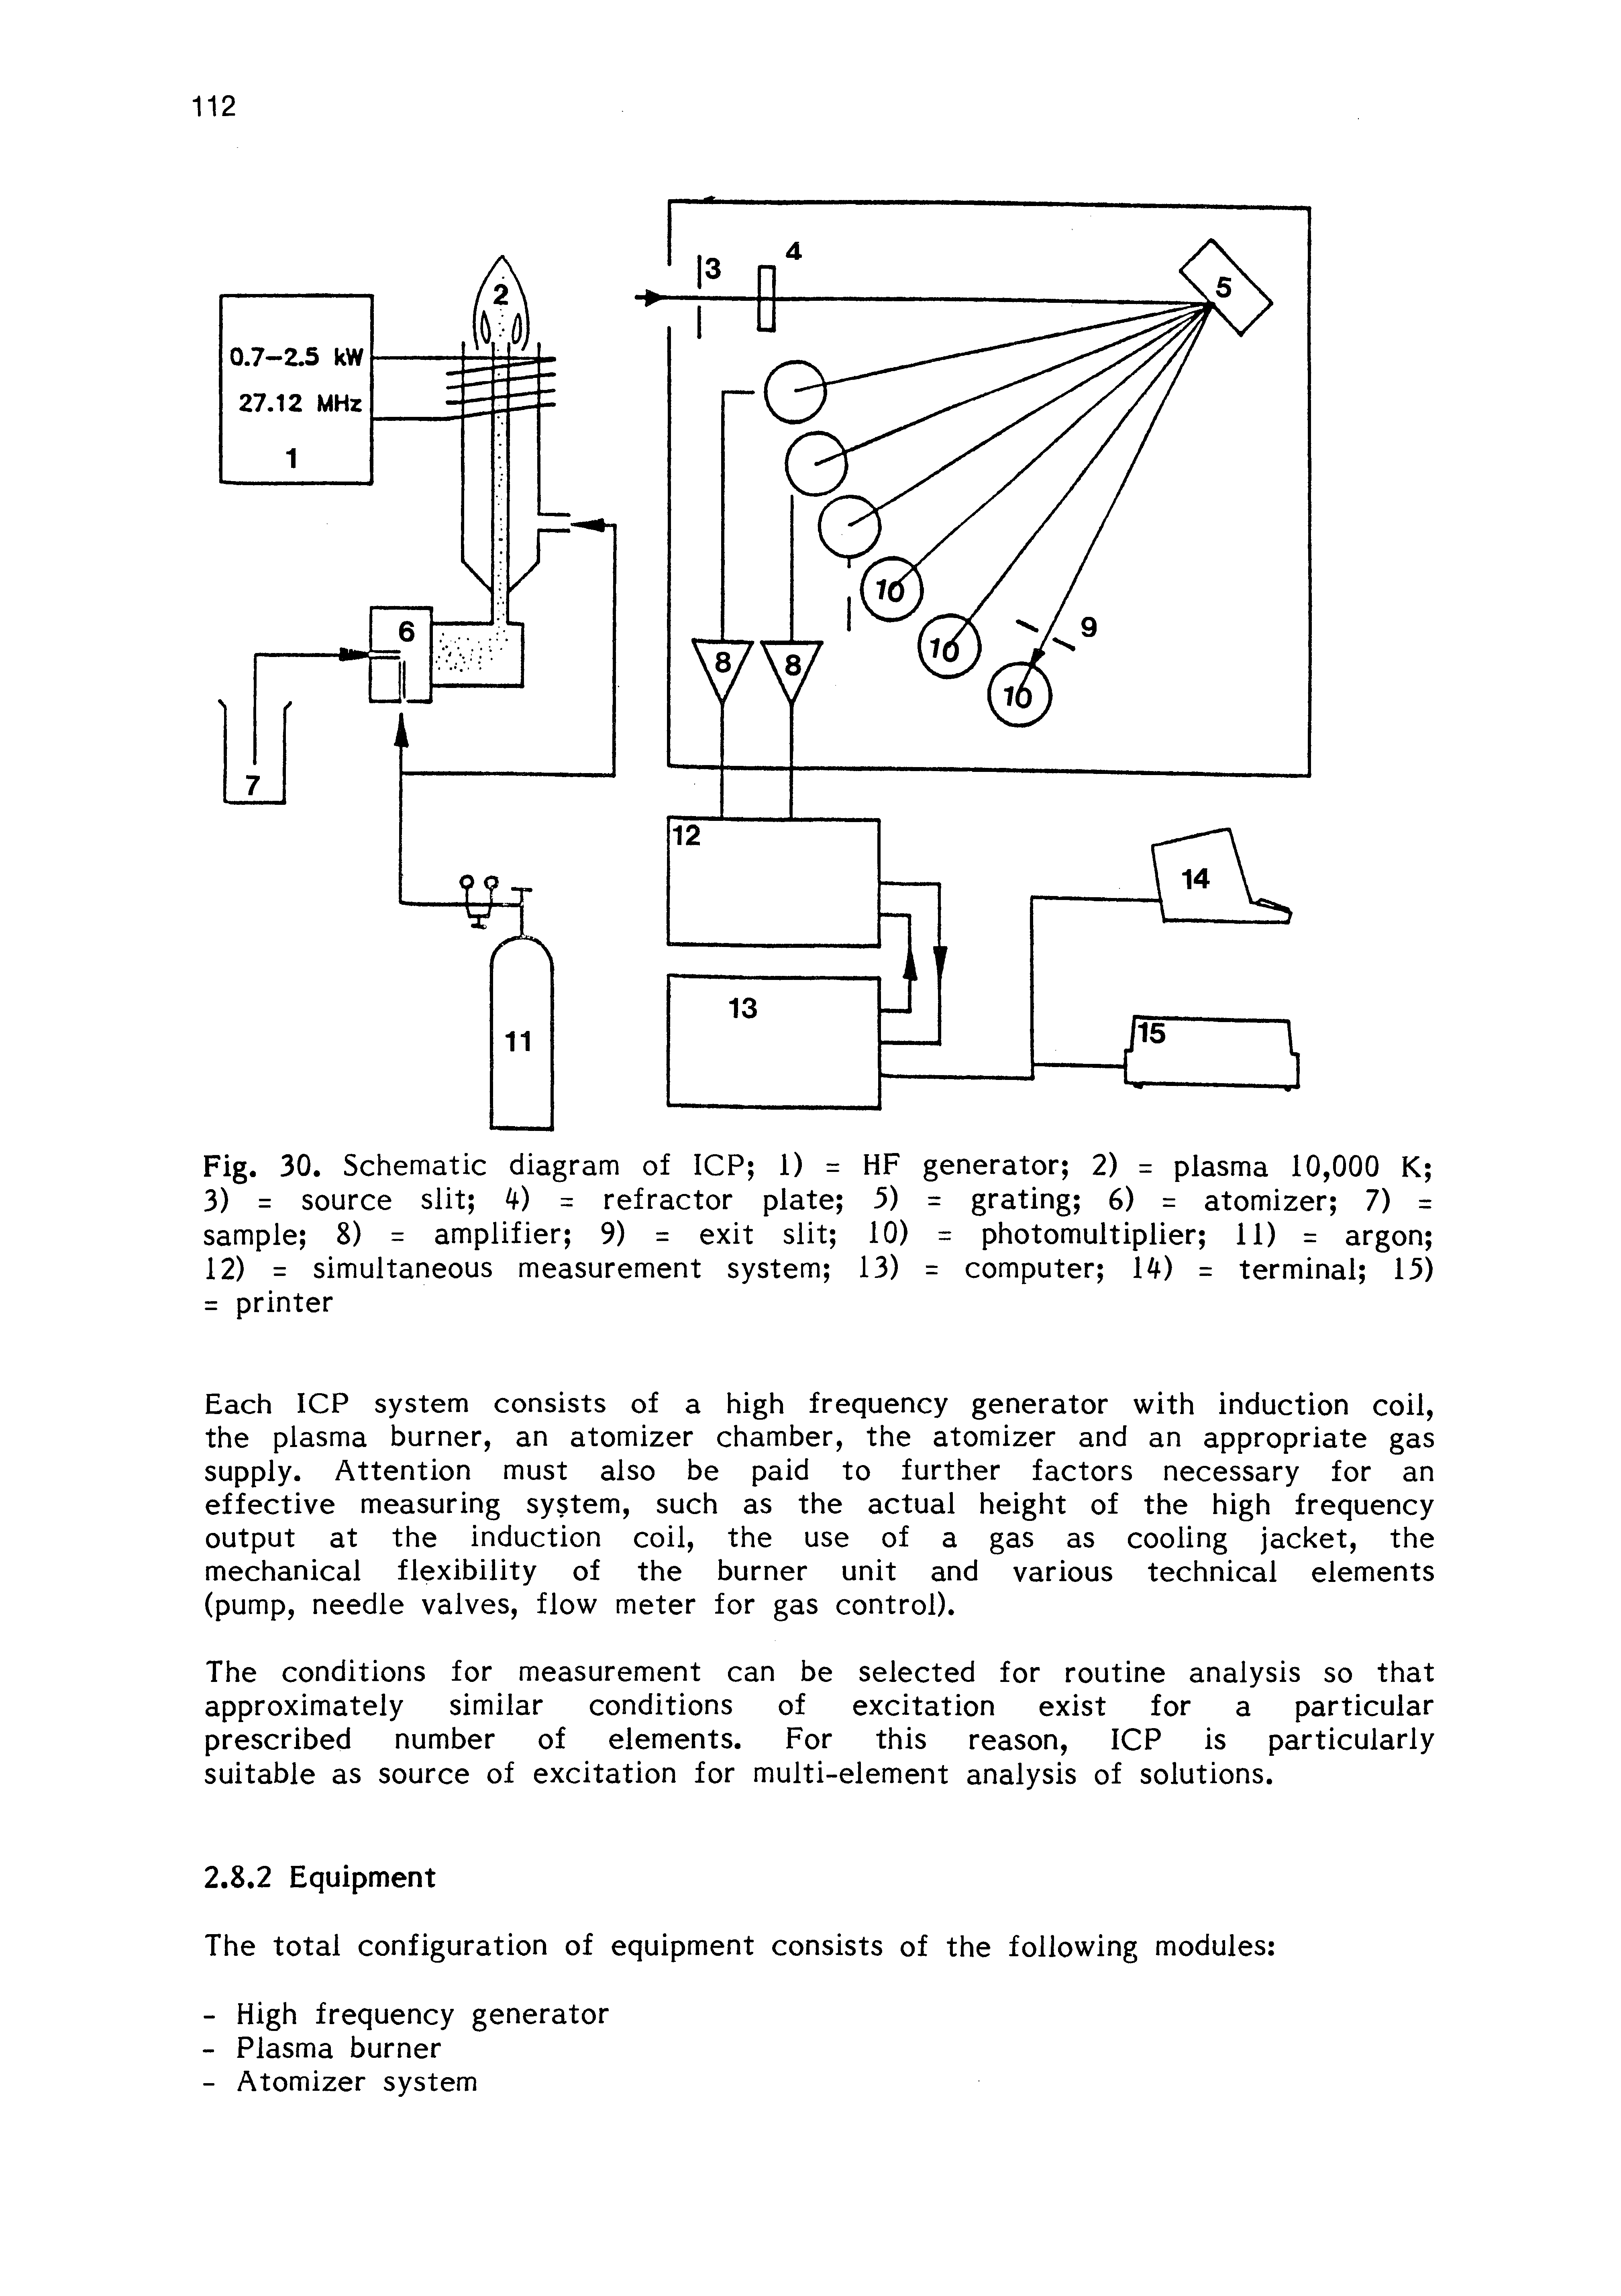 Fig. 30. Schematic diagram of ICP 1) = HF generator 2) = plasma 10,000 K 3) = source slit = refractor plate 5) = grating 6) = atomizer 7) = sample 8) = amplifier 9) = exit slit 10) = photomultiplier 11) = argon 12) = simultaneous measurement system 13) = computer U) = terminal 13) = printer...